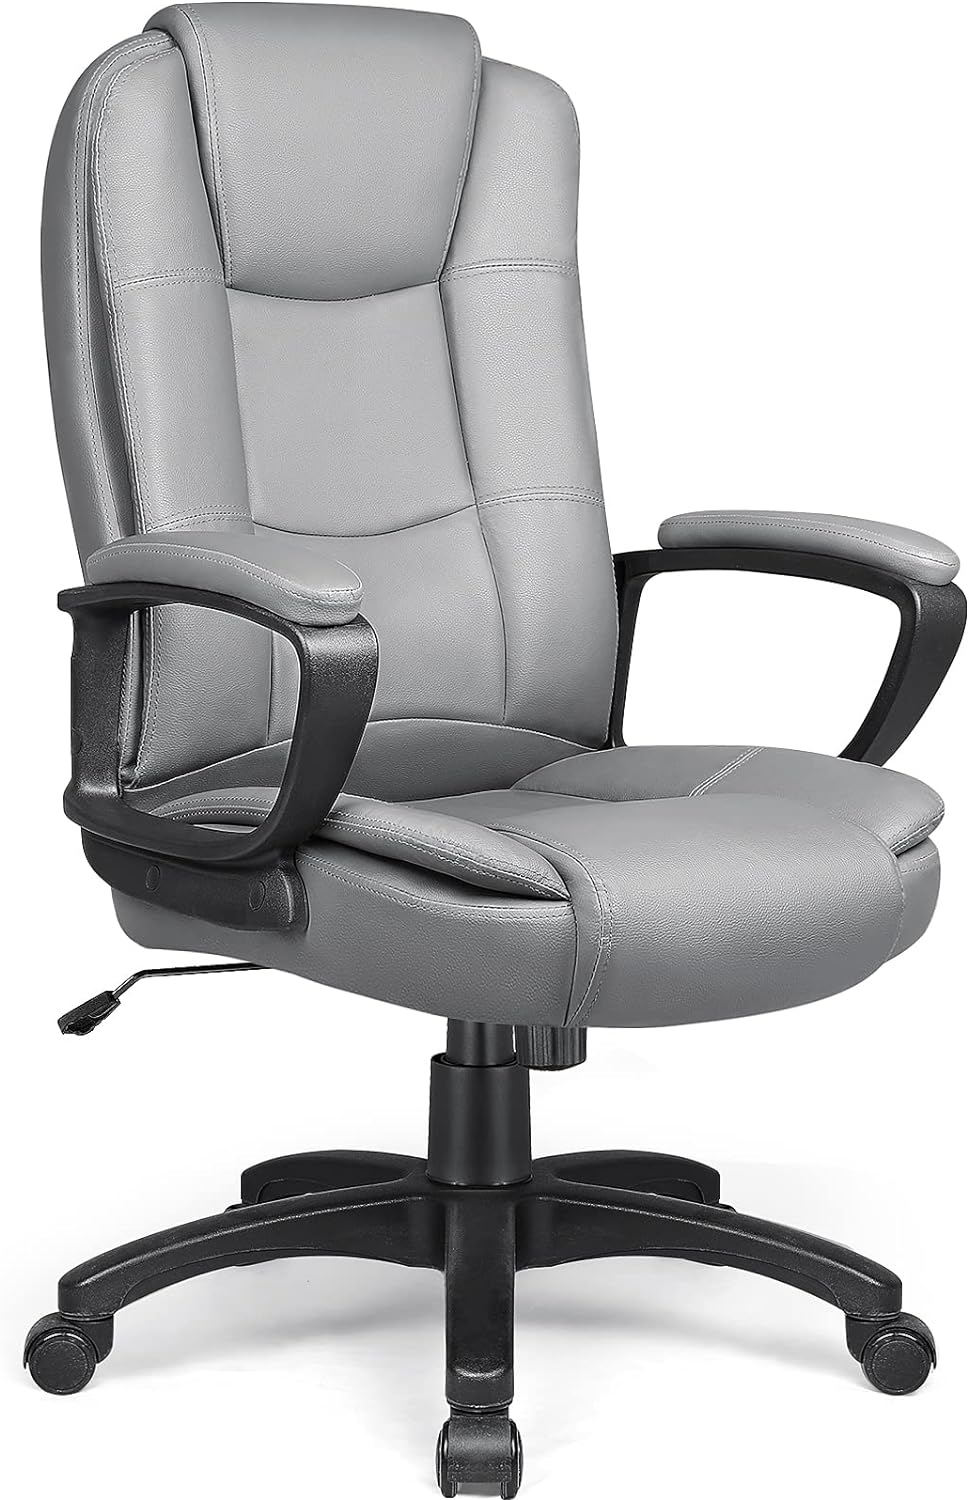 Cojín para silla de oficina, cojín para silla de escritorio para sentarse  por mucho tiempo, cojín de asiento extra grande unido para silla de oficina